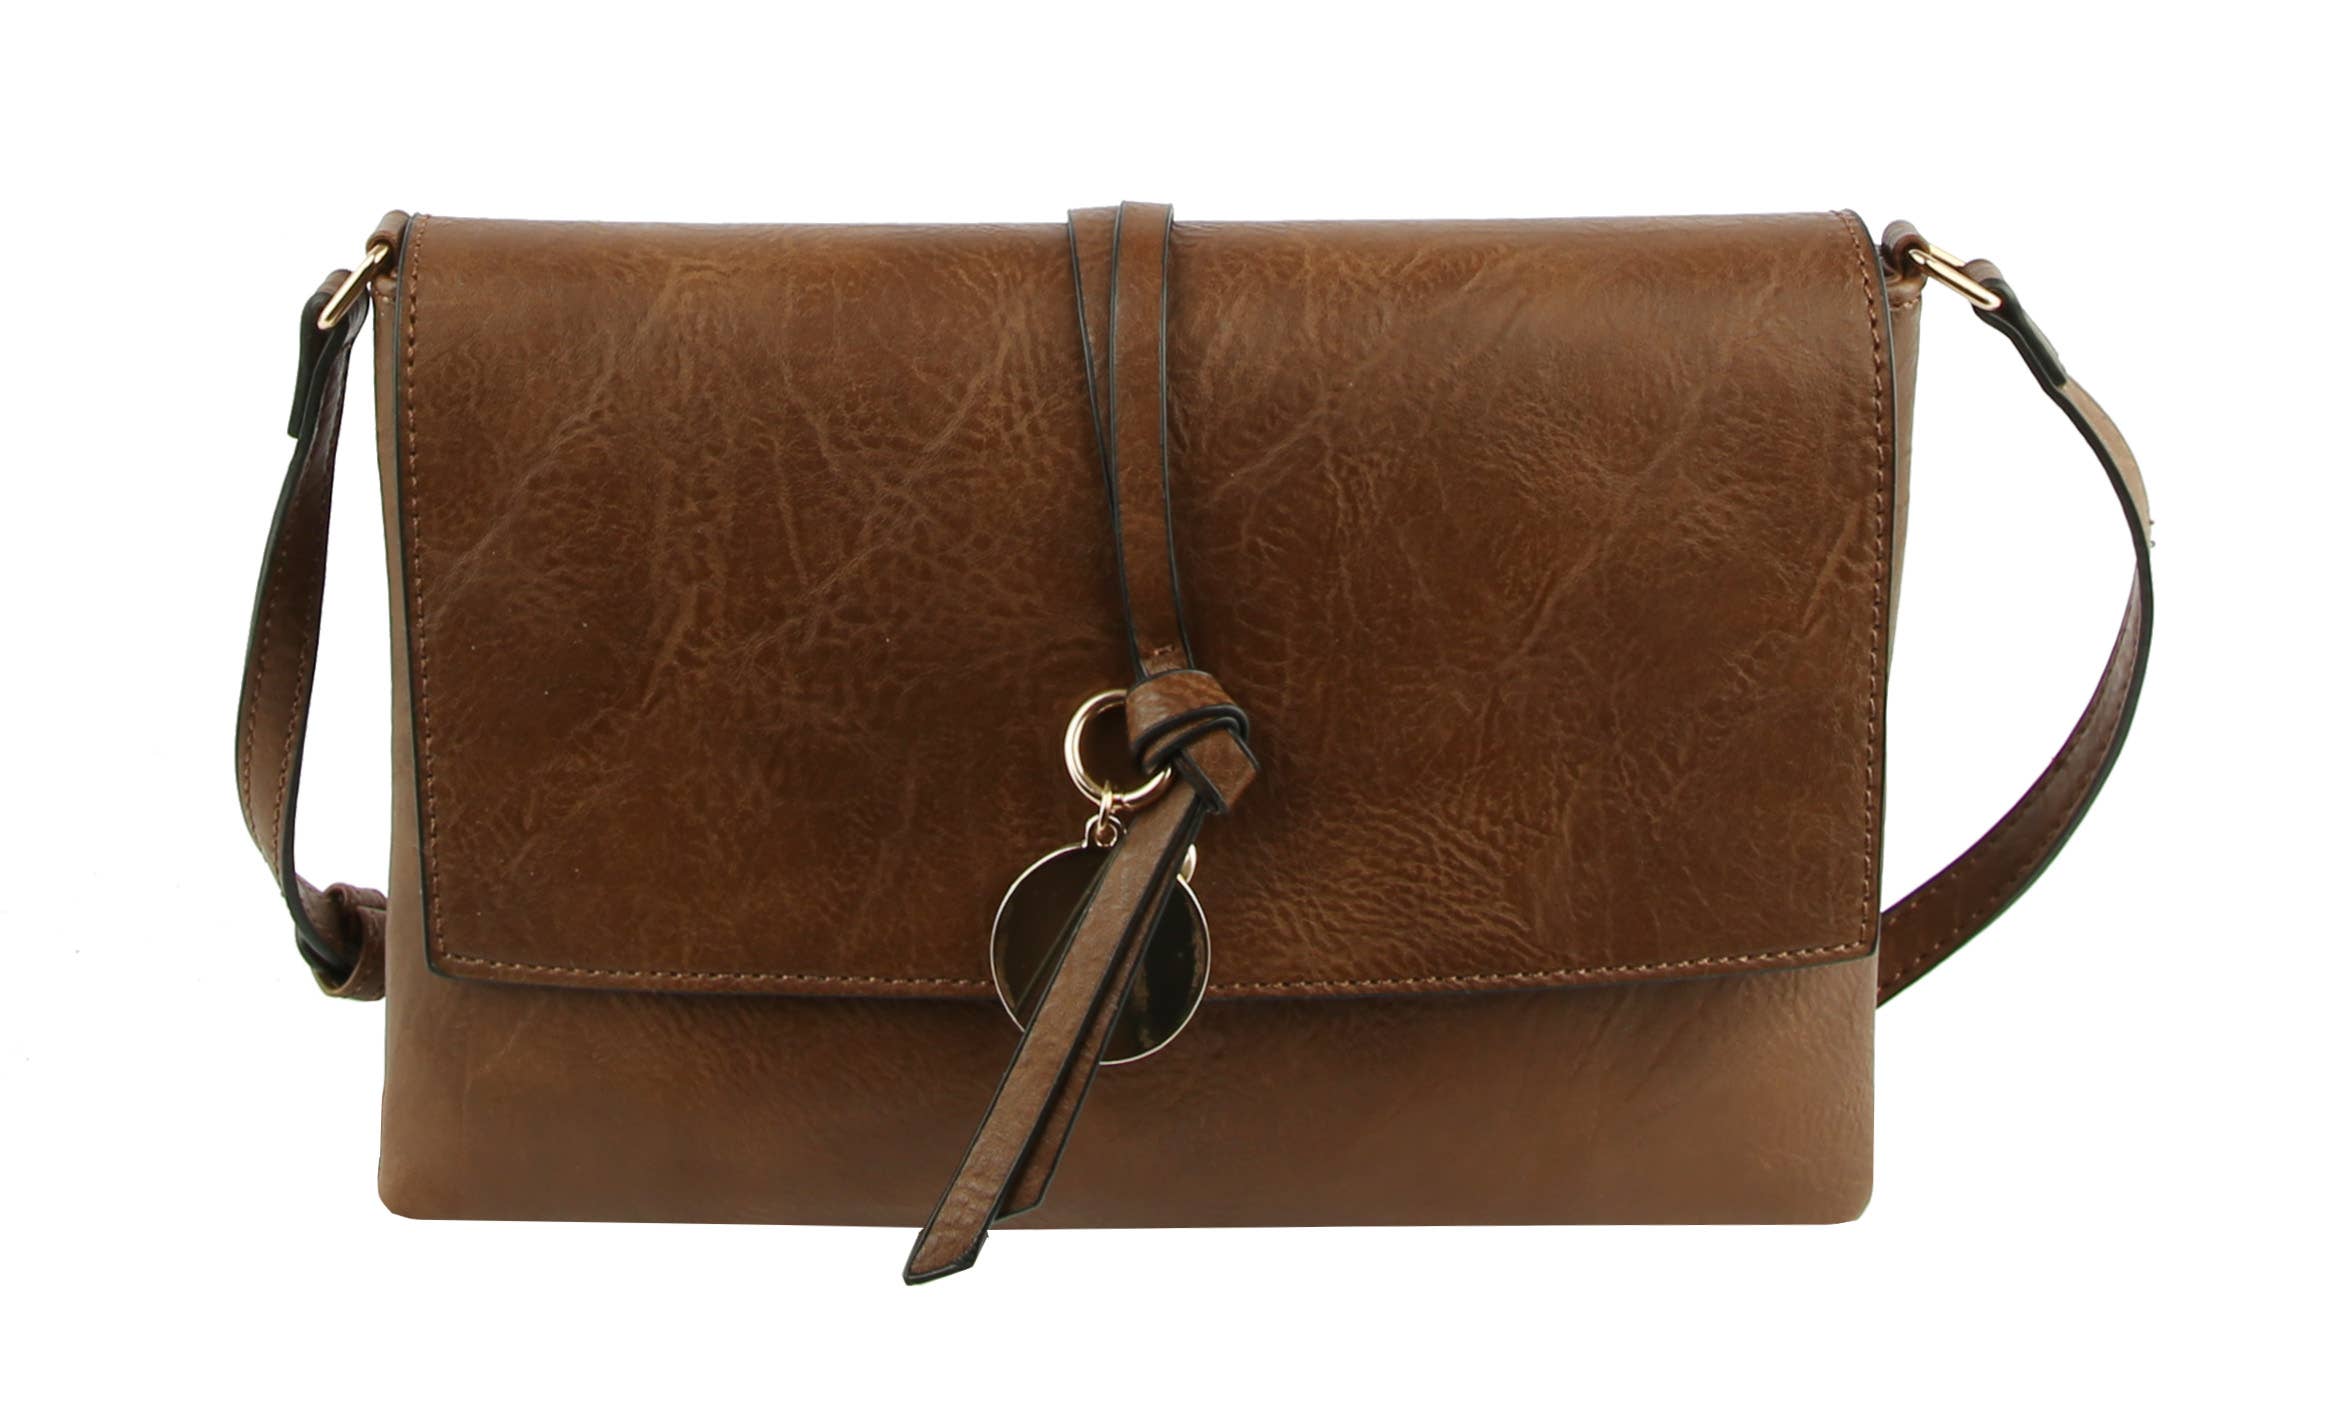 Elegant vegan leather crossbody bag in coffee brown color